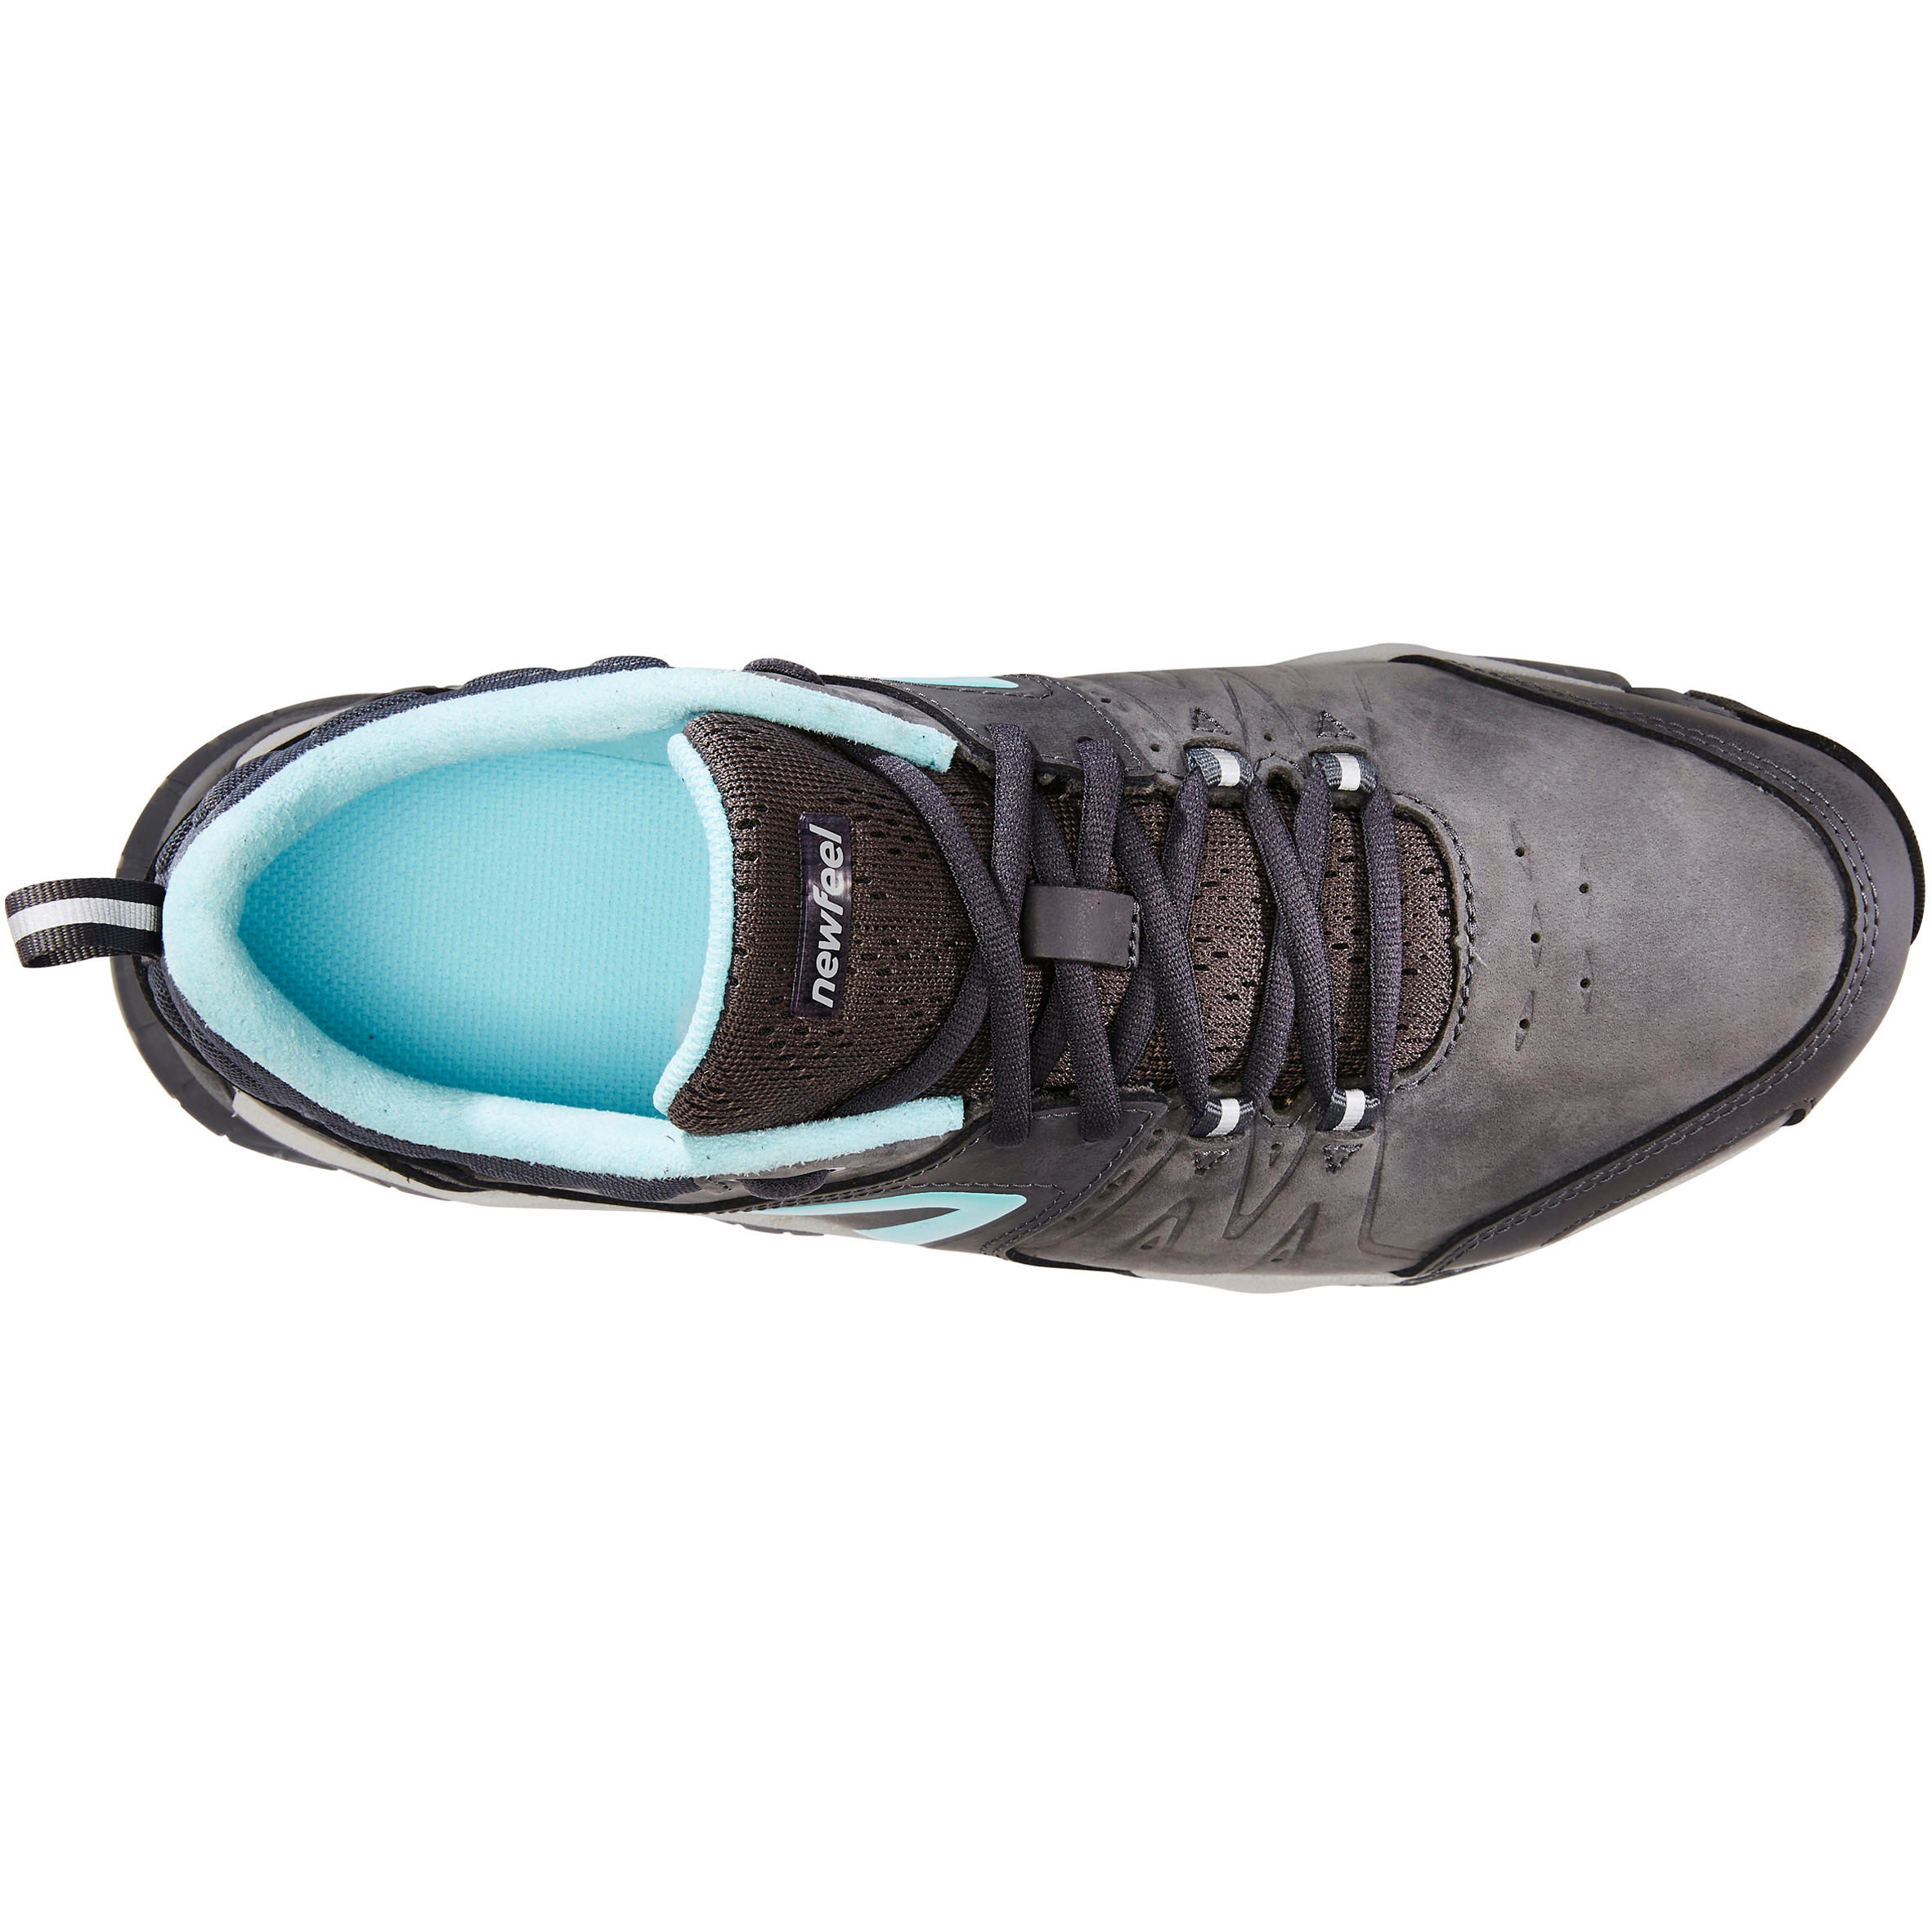 PW 940 Propulse Motion Women's Fitness Walking Shoes leather grey/blue 8/10